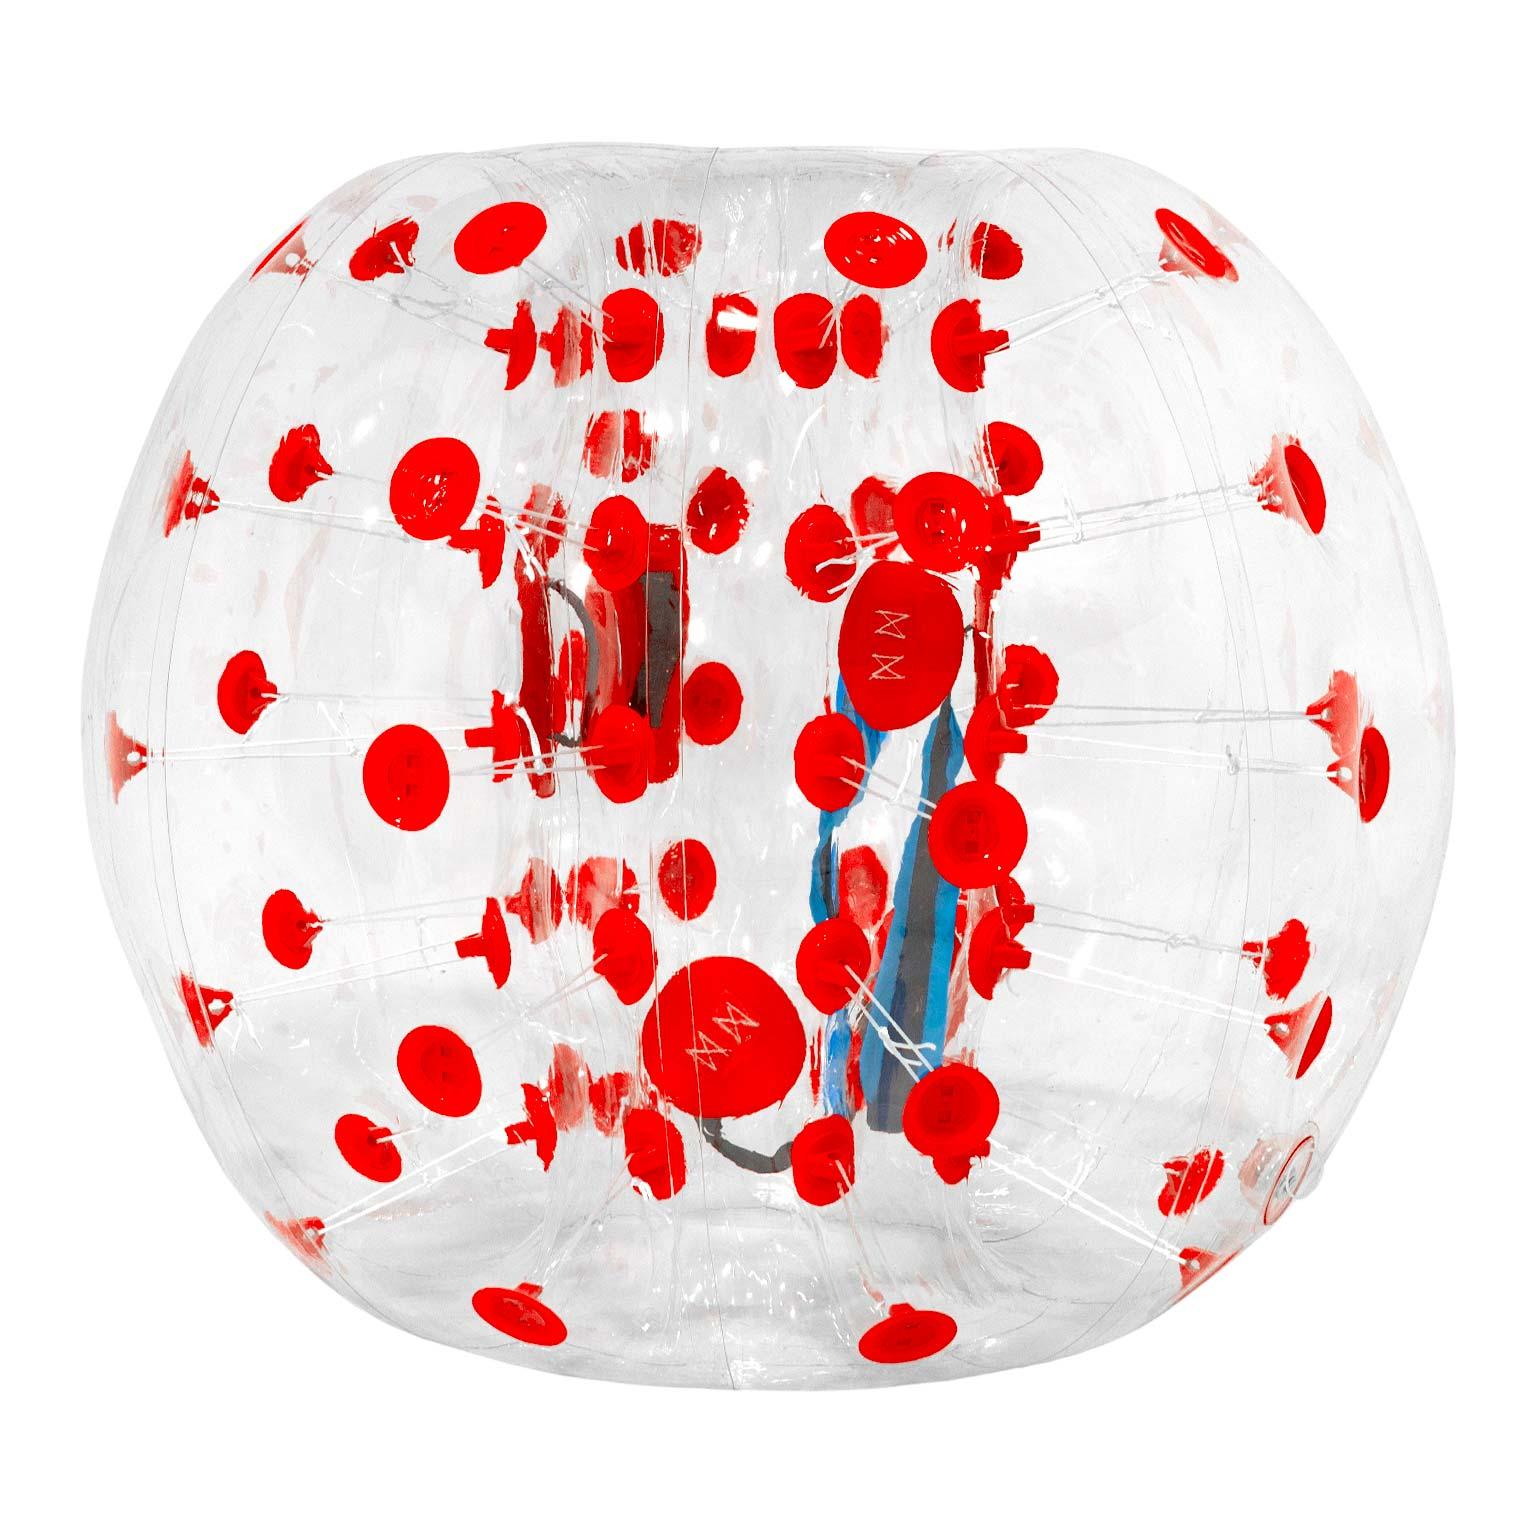 Bumper Ball 1.5m Red/Clear PVC